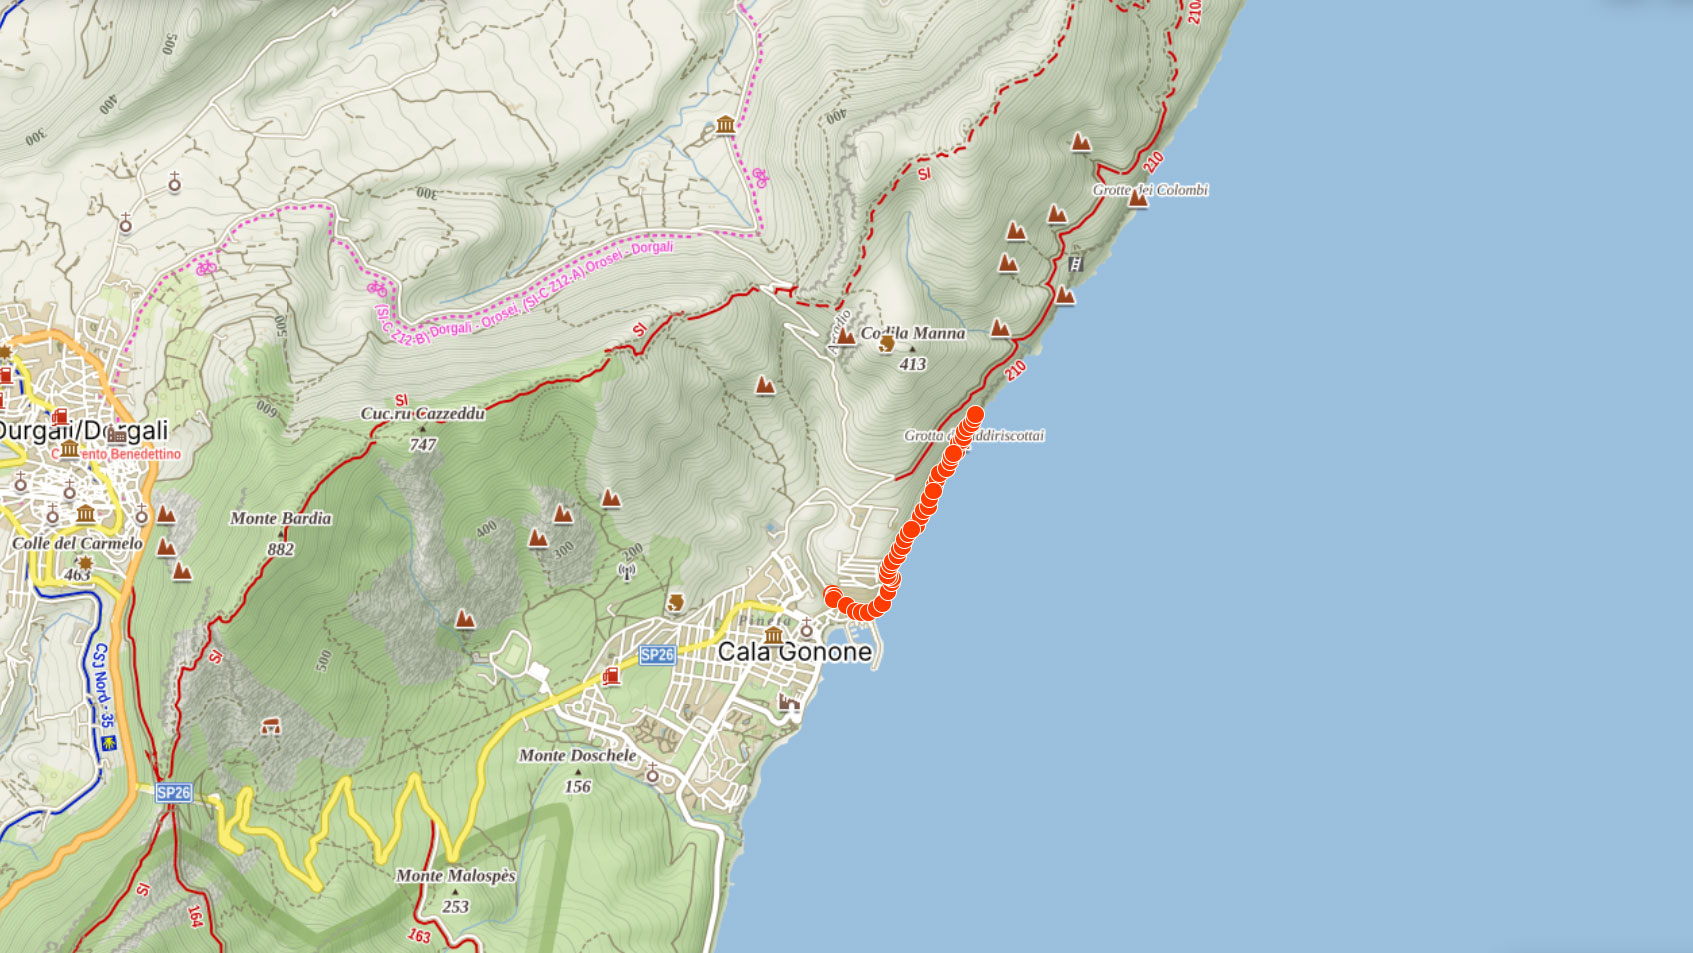 Mapa výletu z Cala Gonone k jeskyním Grotta di Biddiriscottai